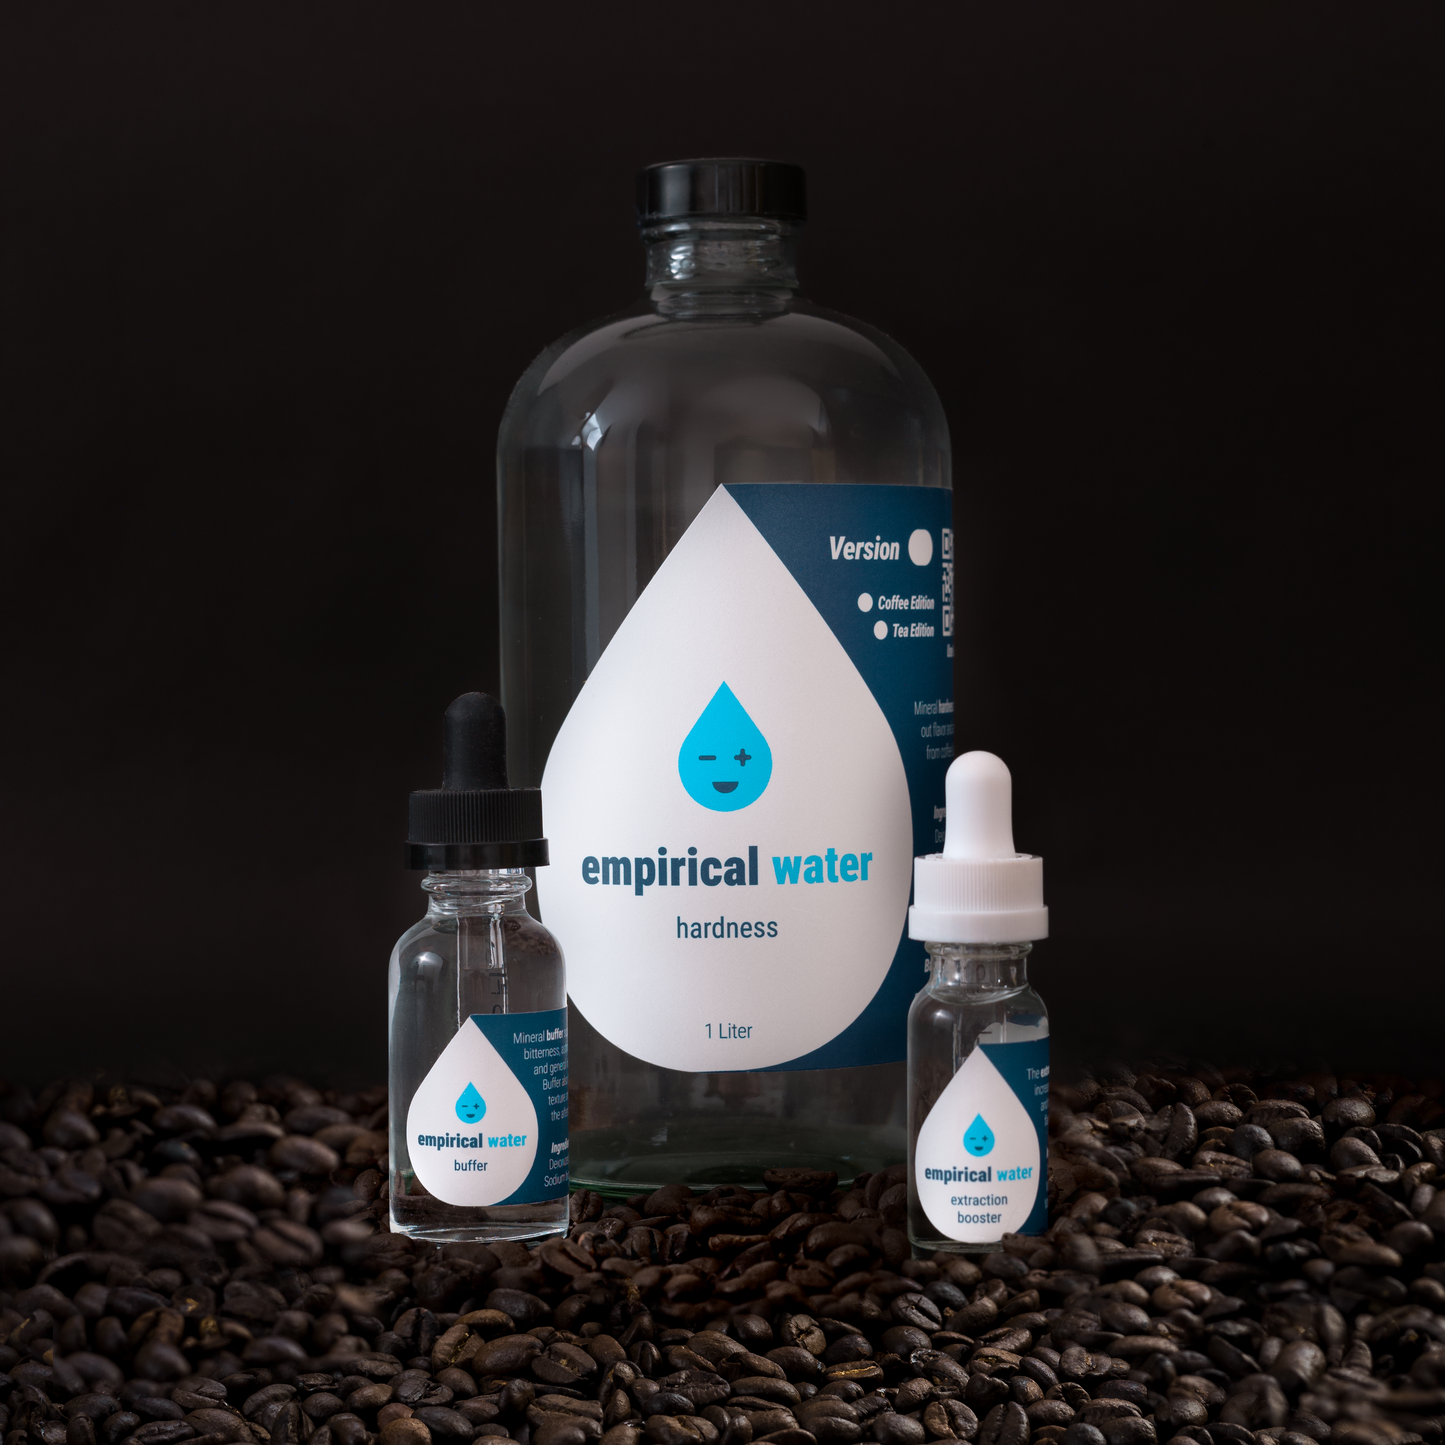 empirical water AQUIFER, v1.1 — Concentrate